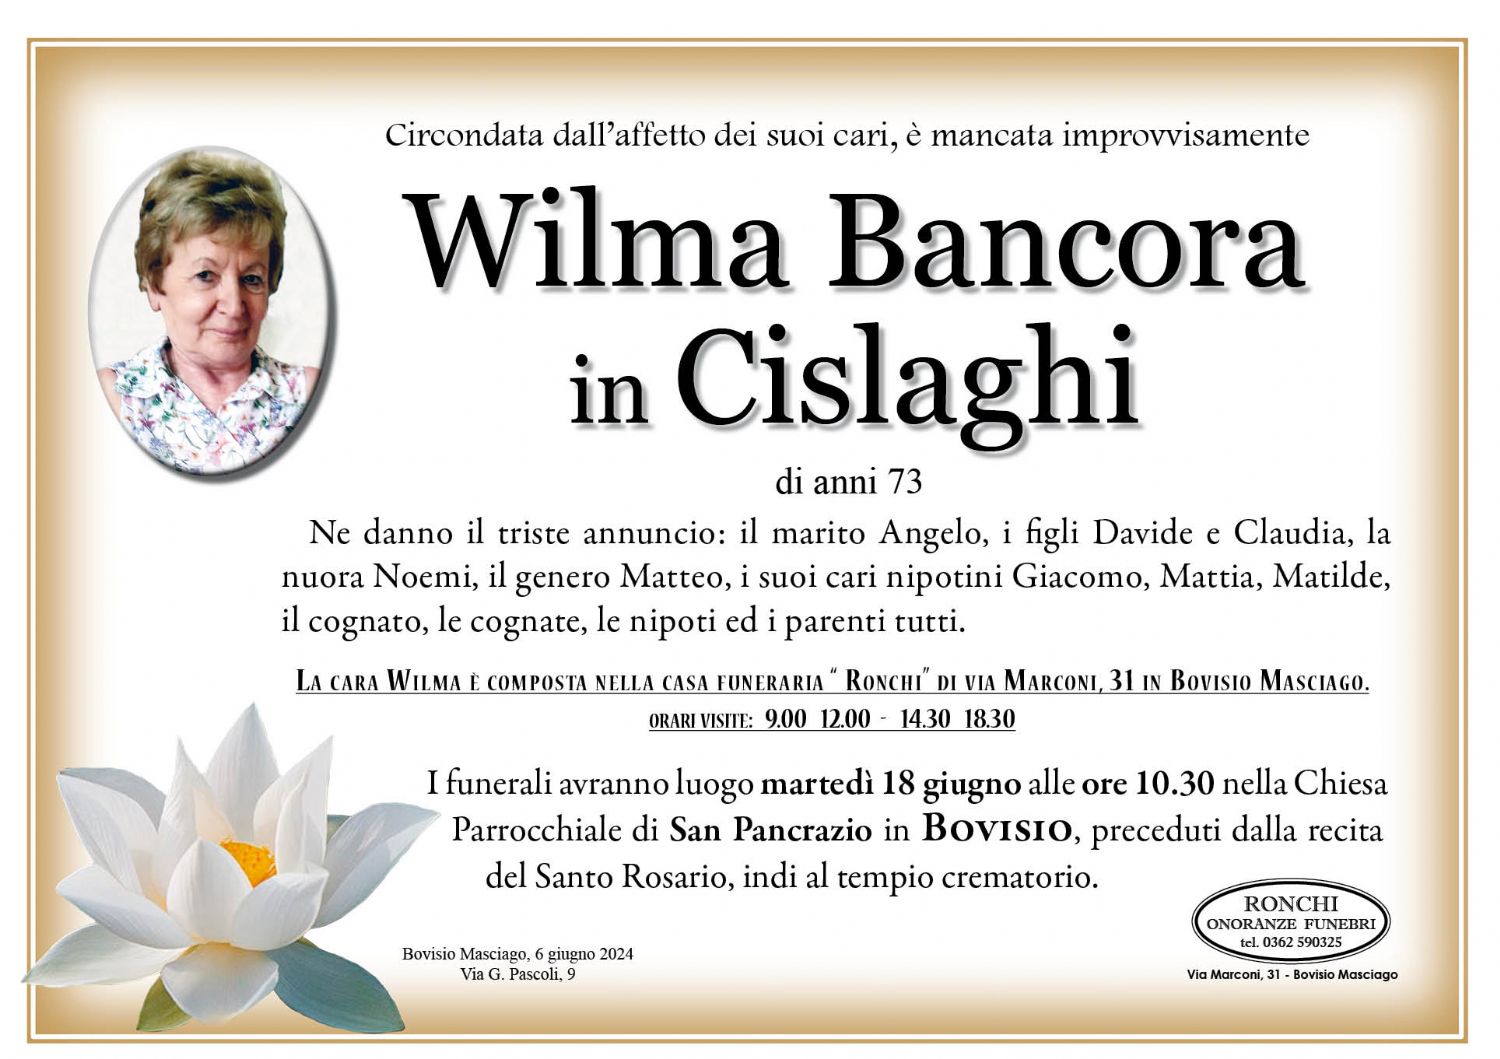 Wilma Bancora